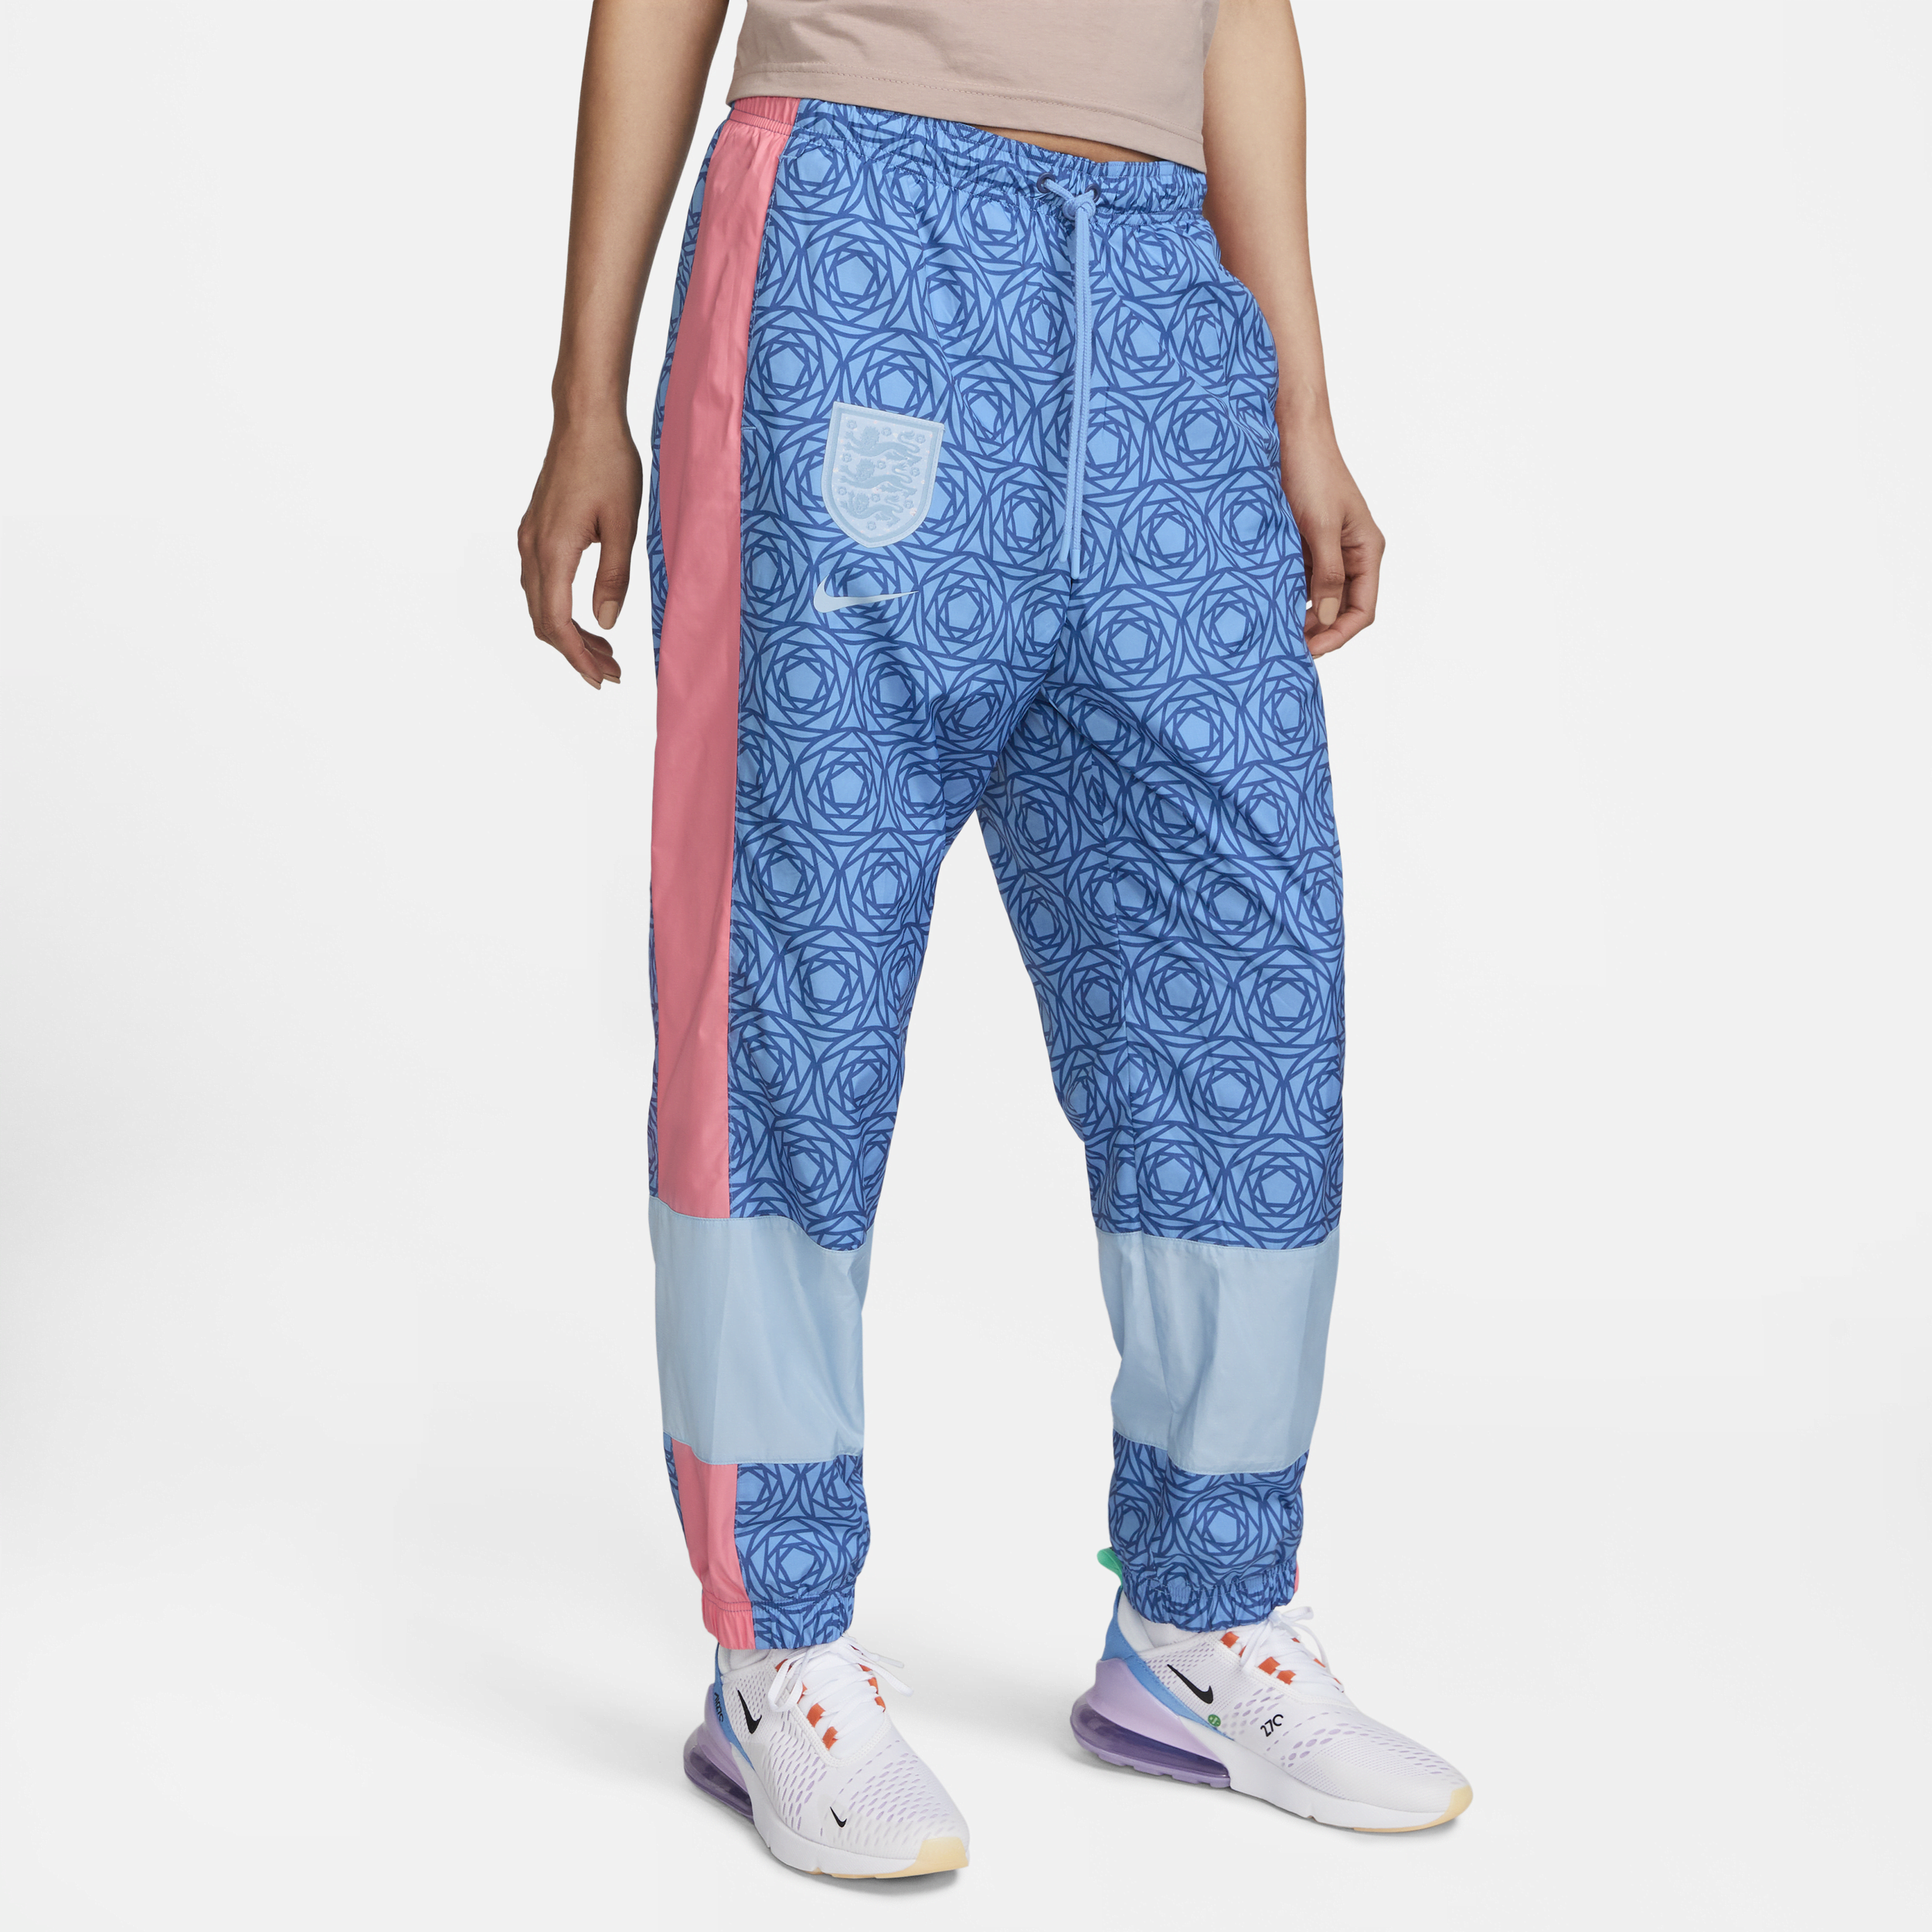 Engeland Repel Essential Nike joggingbroek met halfhoge taille voor dames - Blauw